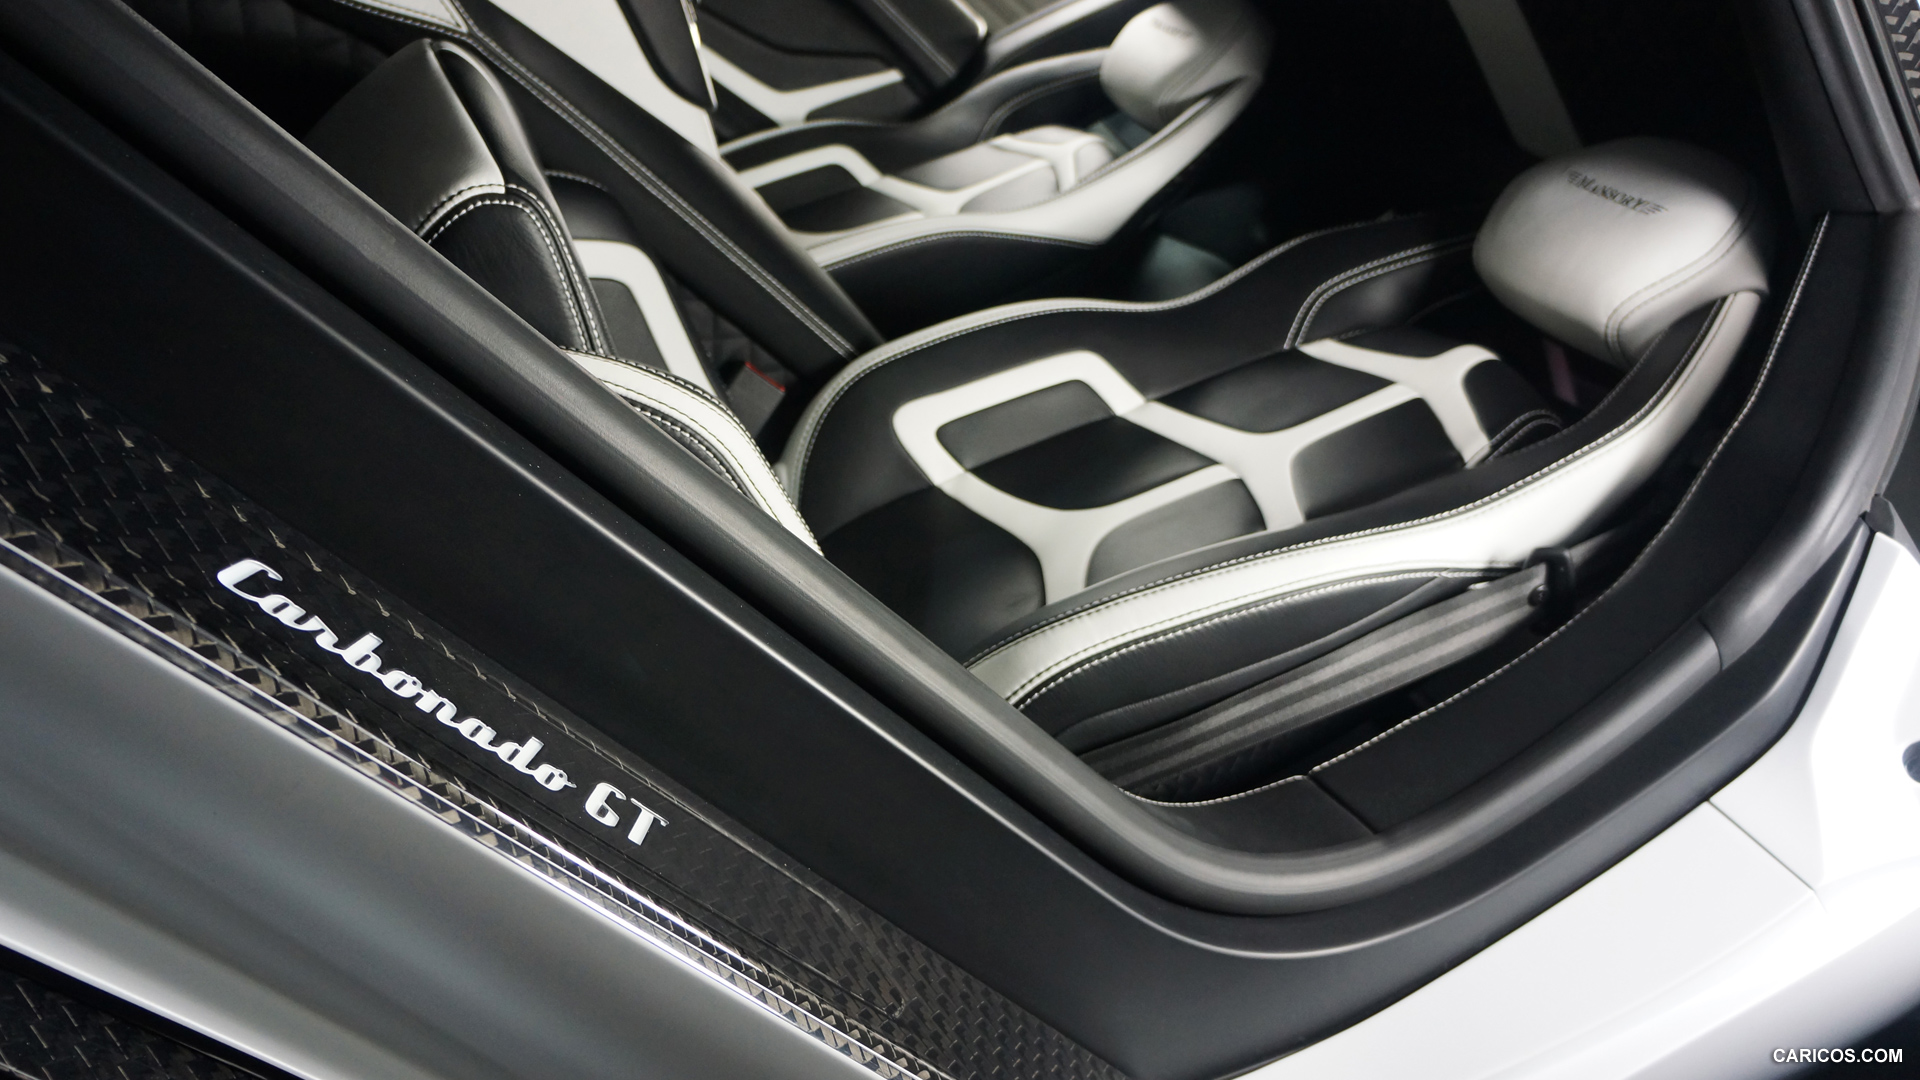 2014 Mansory Carbonado GT based on Lamborghini Aventador  - Door Sill, #5 of 8